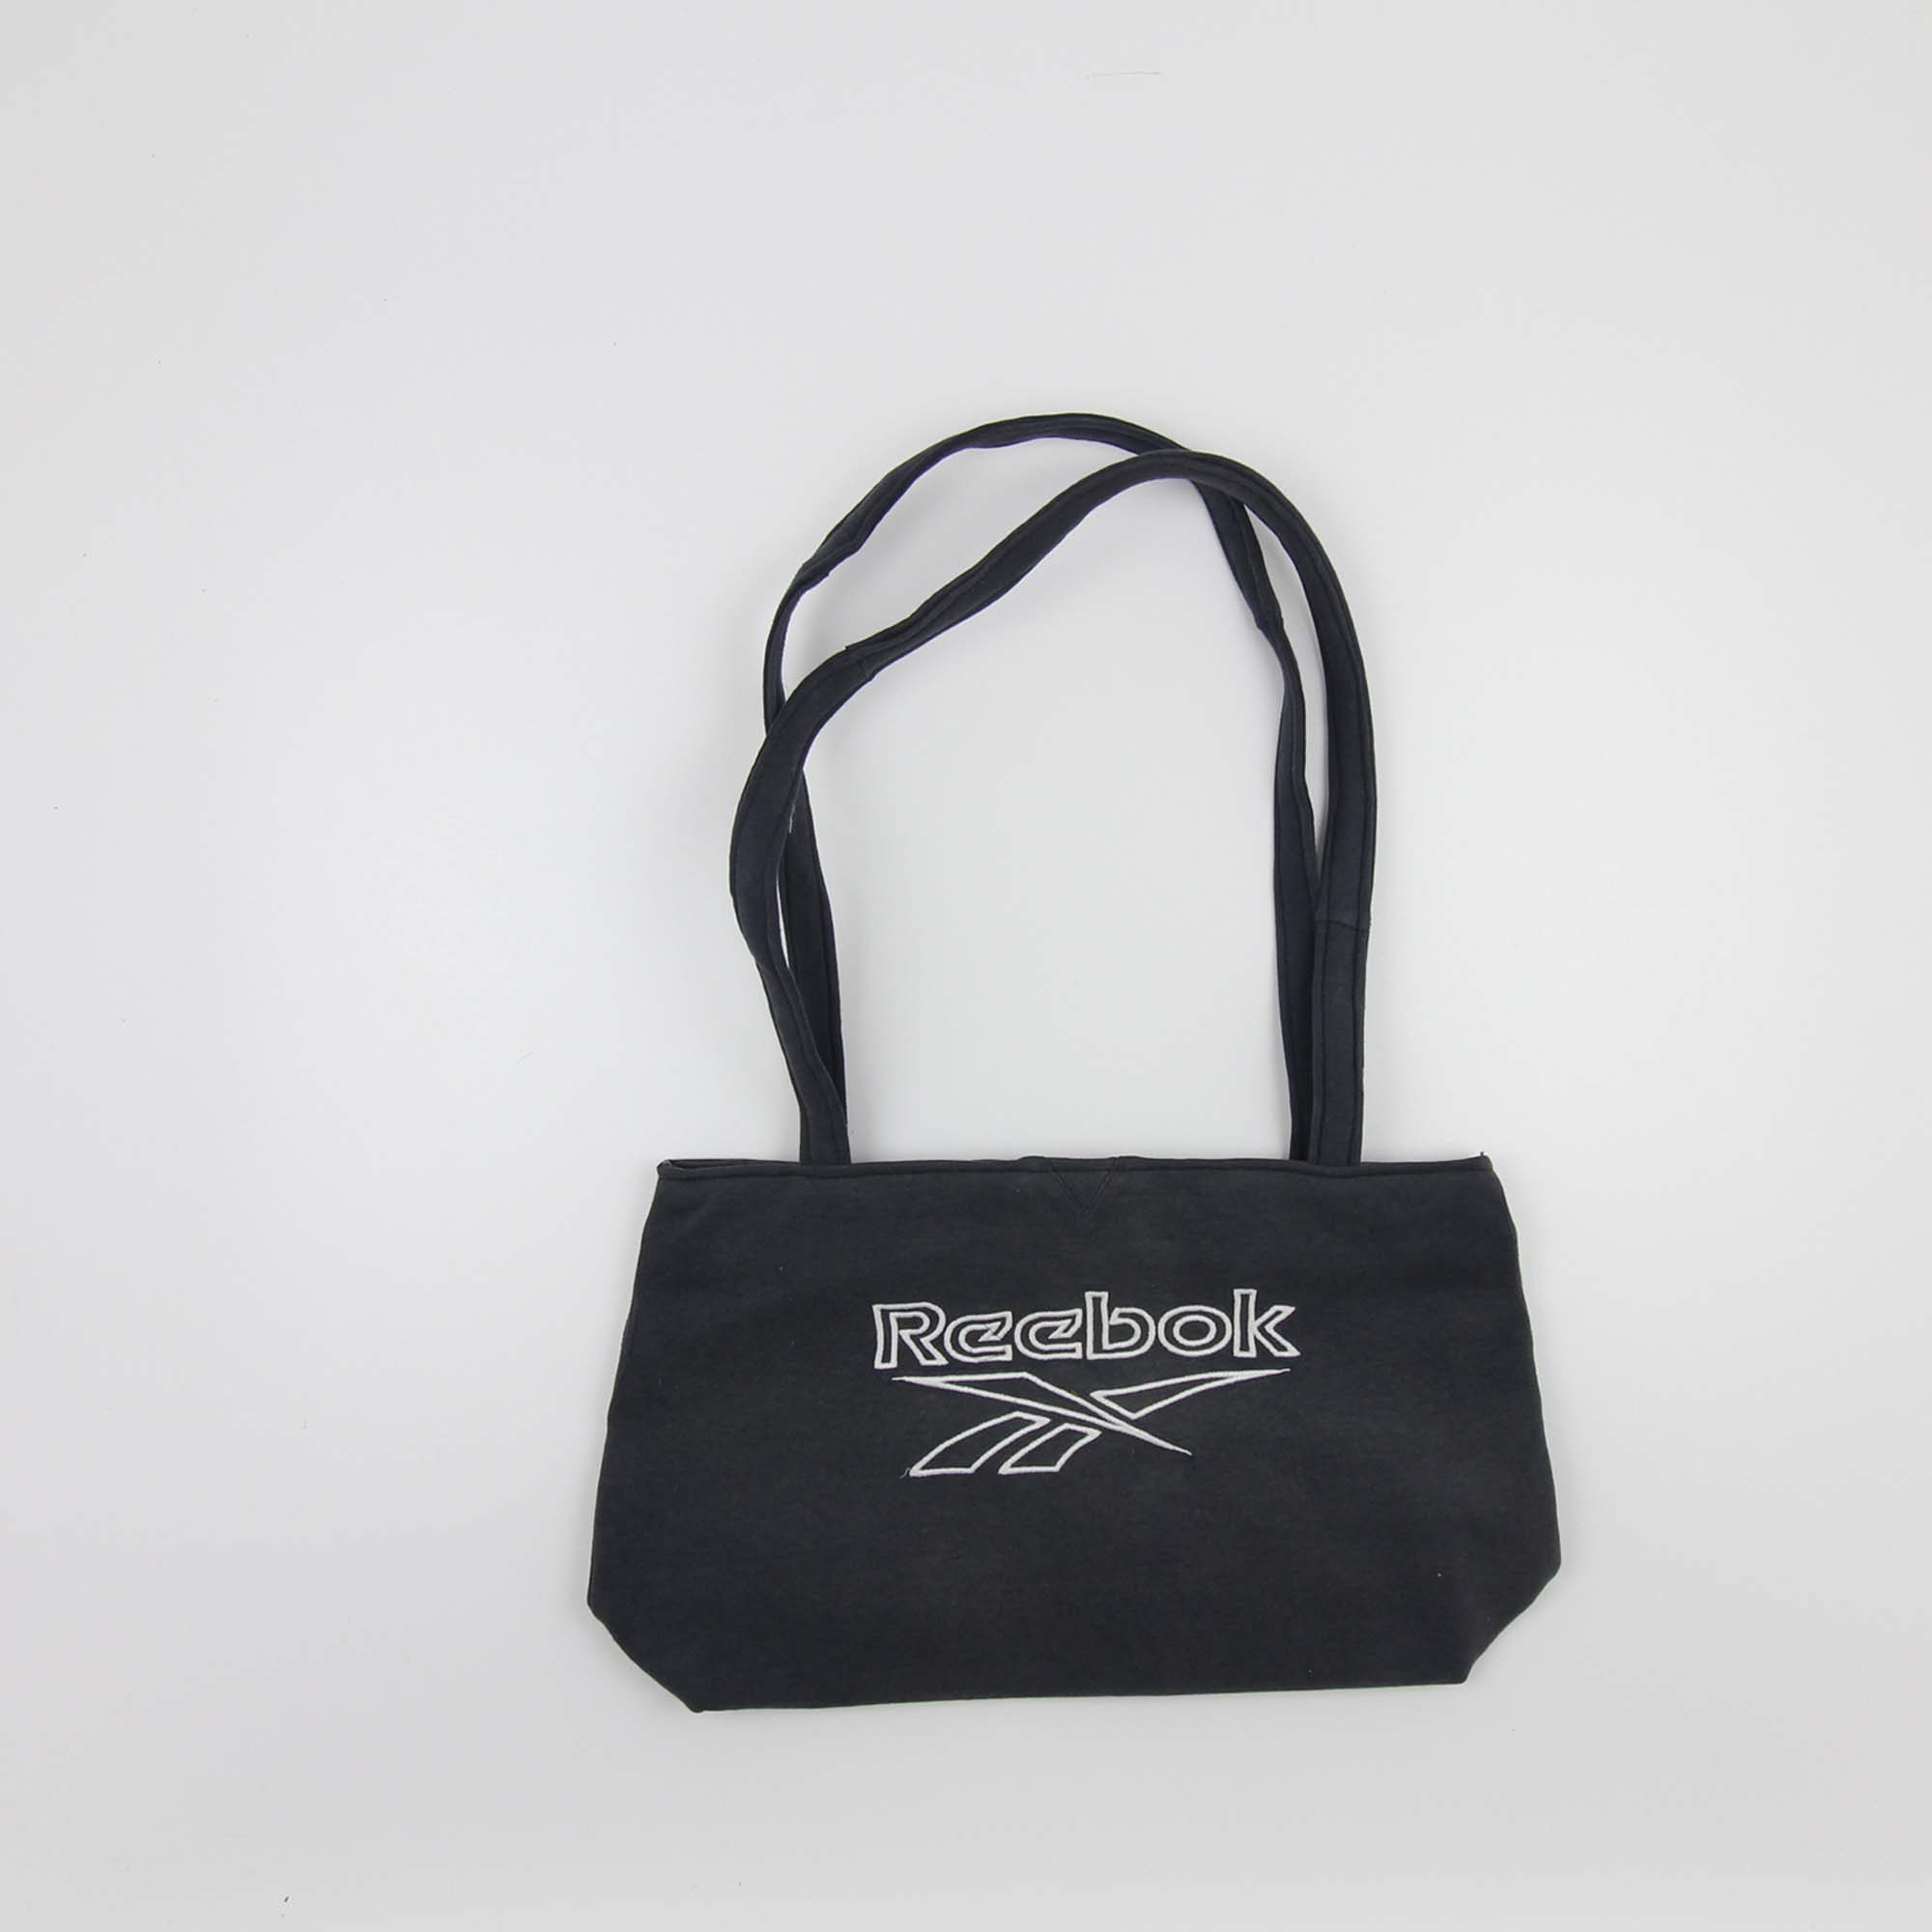 Reebok Rework Bag